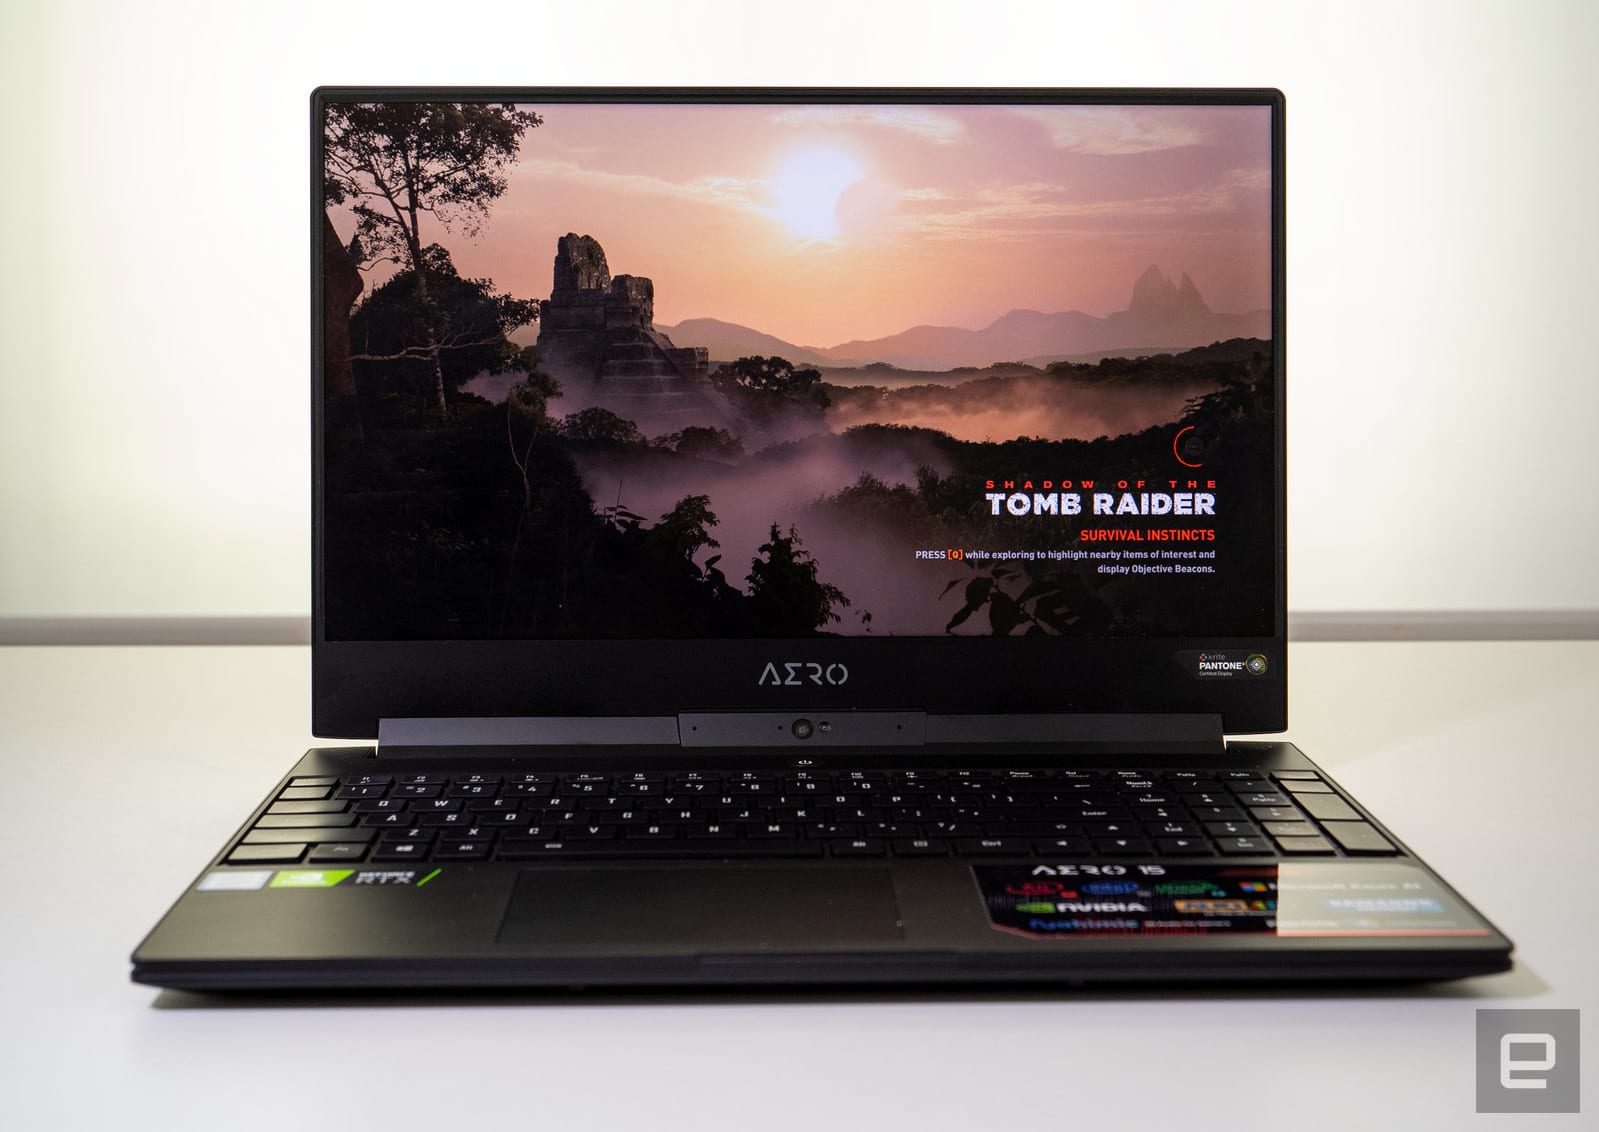 Gigabyte Aero 15 Y9 gaming laptop with NVIDIA RTX 2080 Max-Q graphics